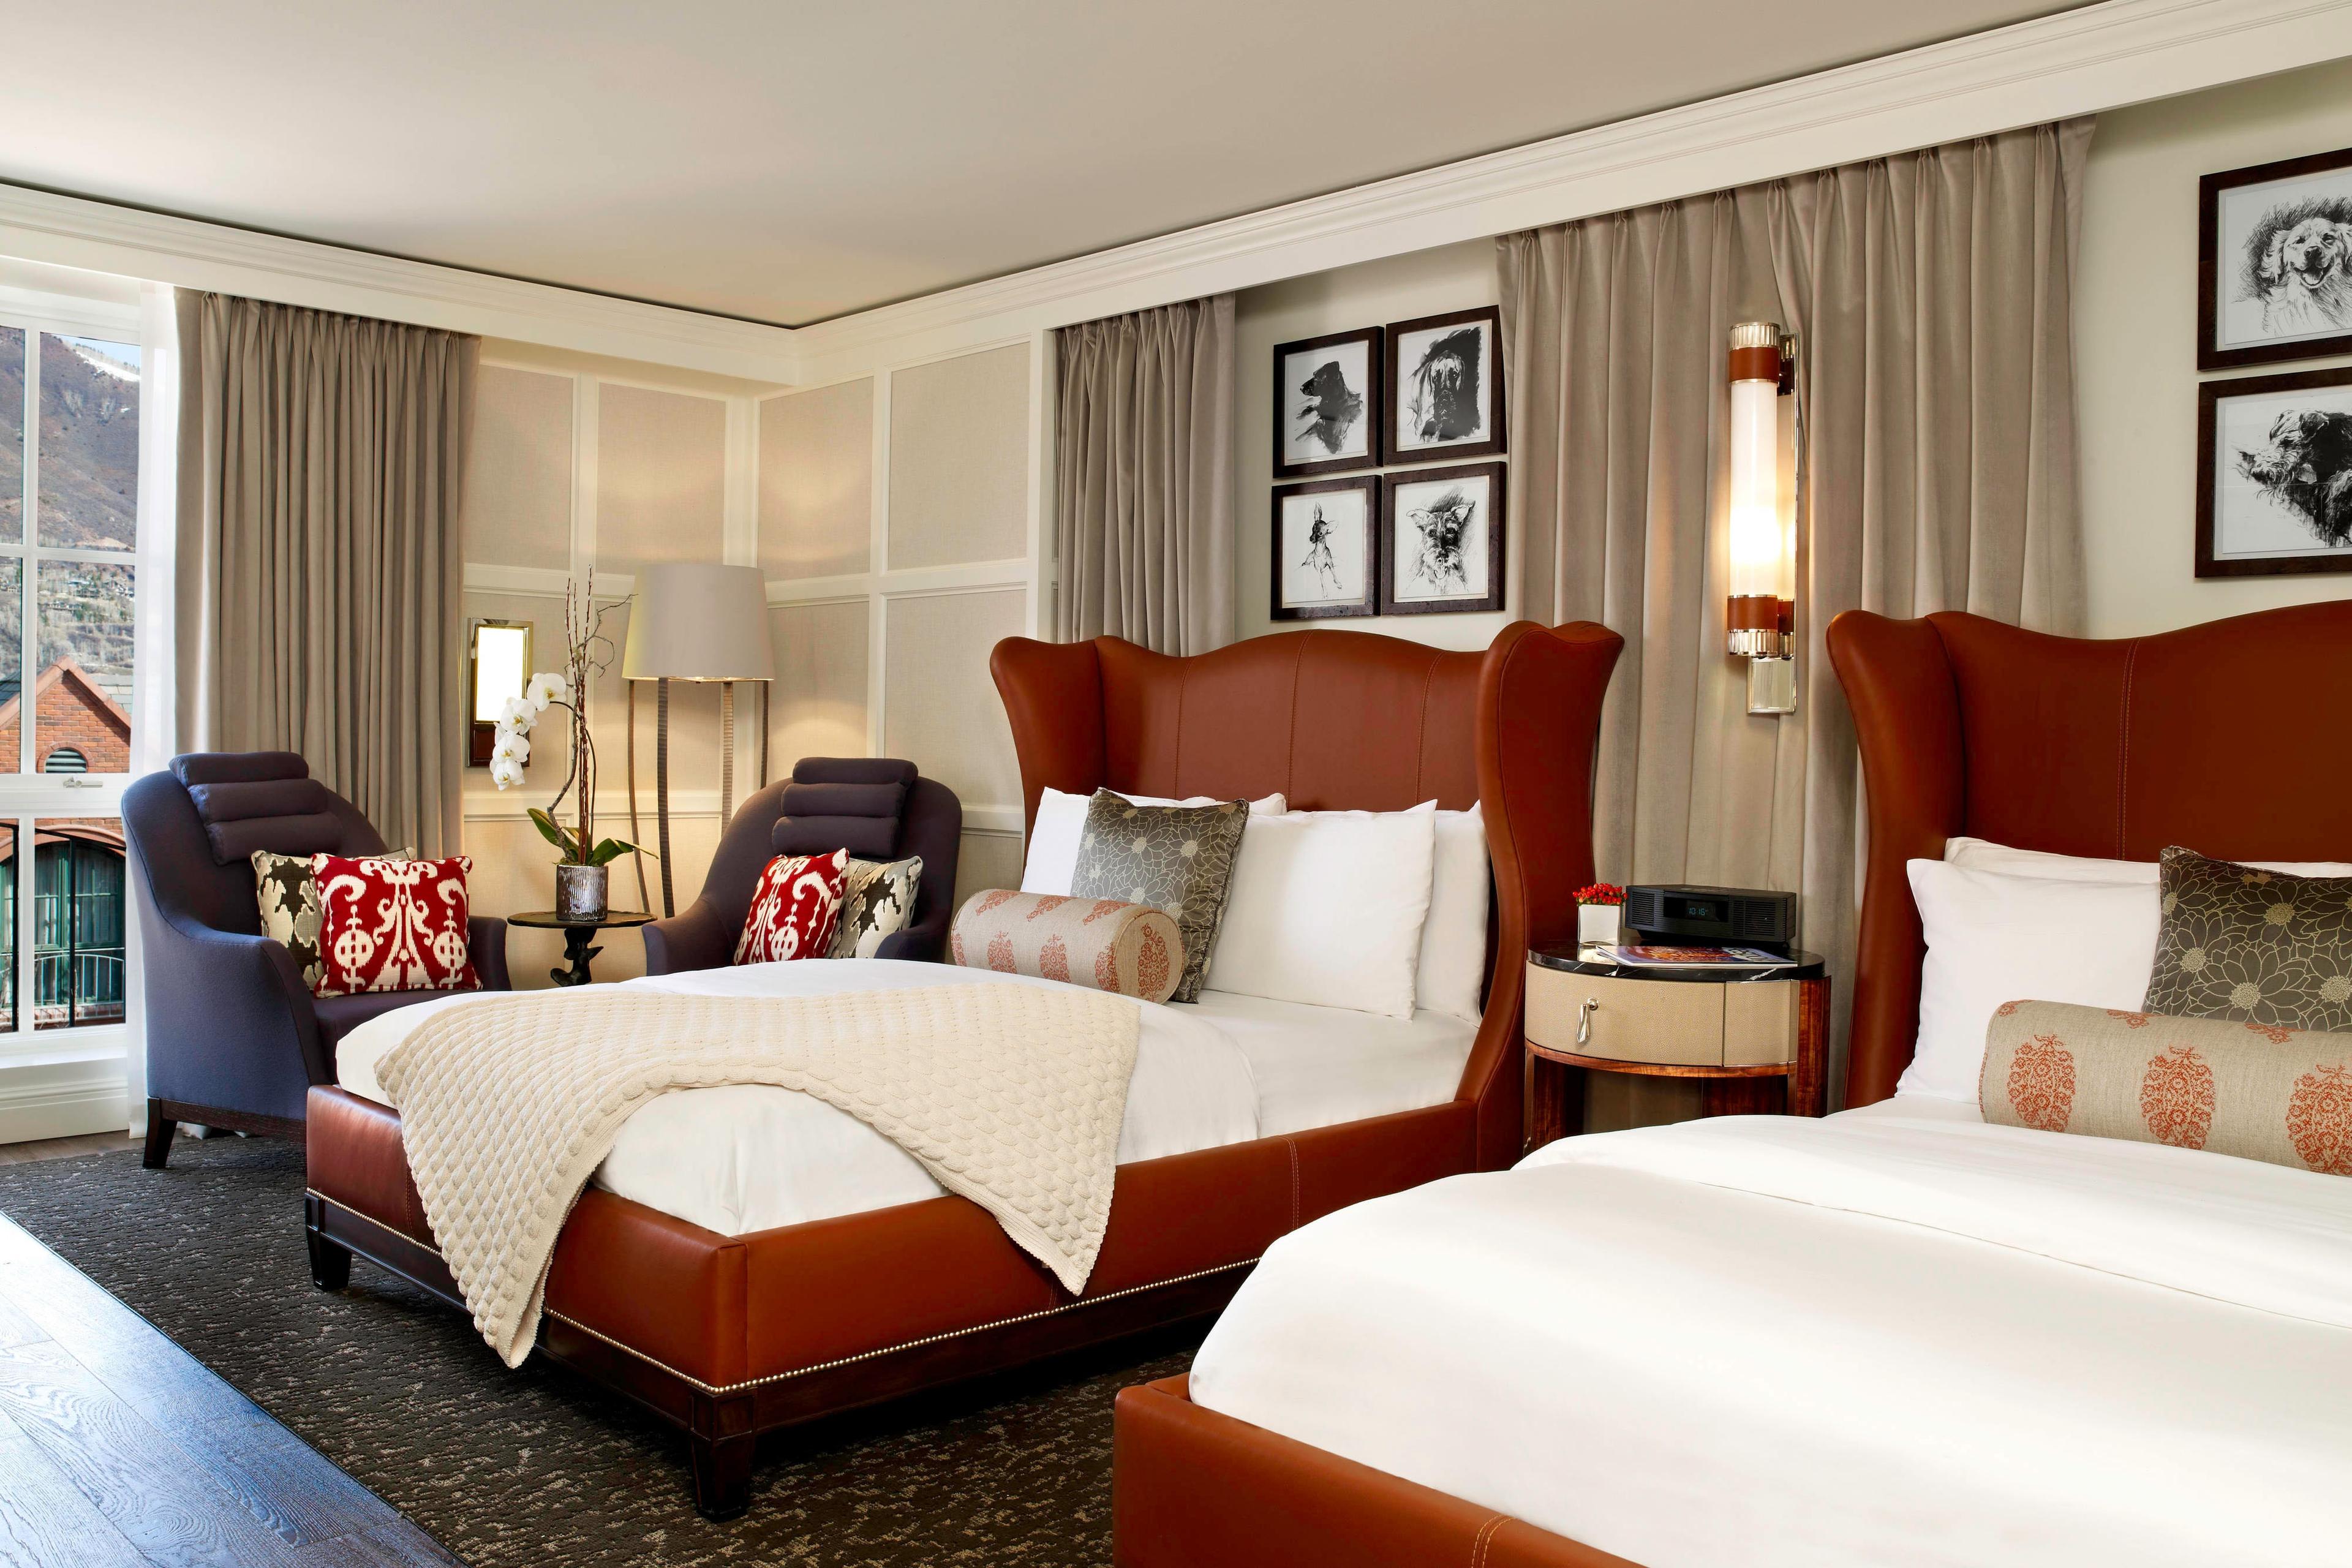 Enjoy exquisitely designed luxury accommodations with double beds.